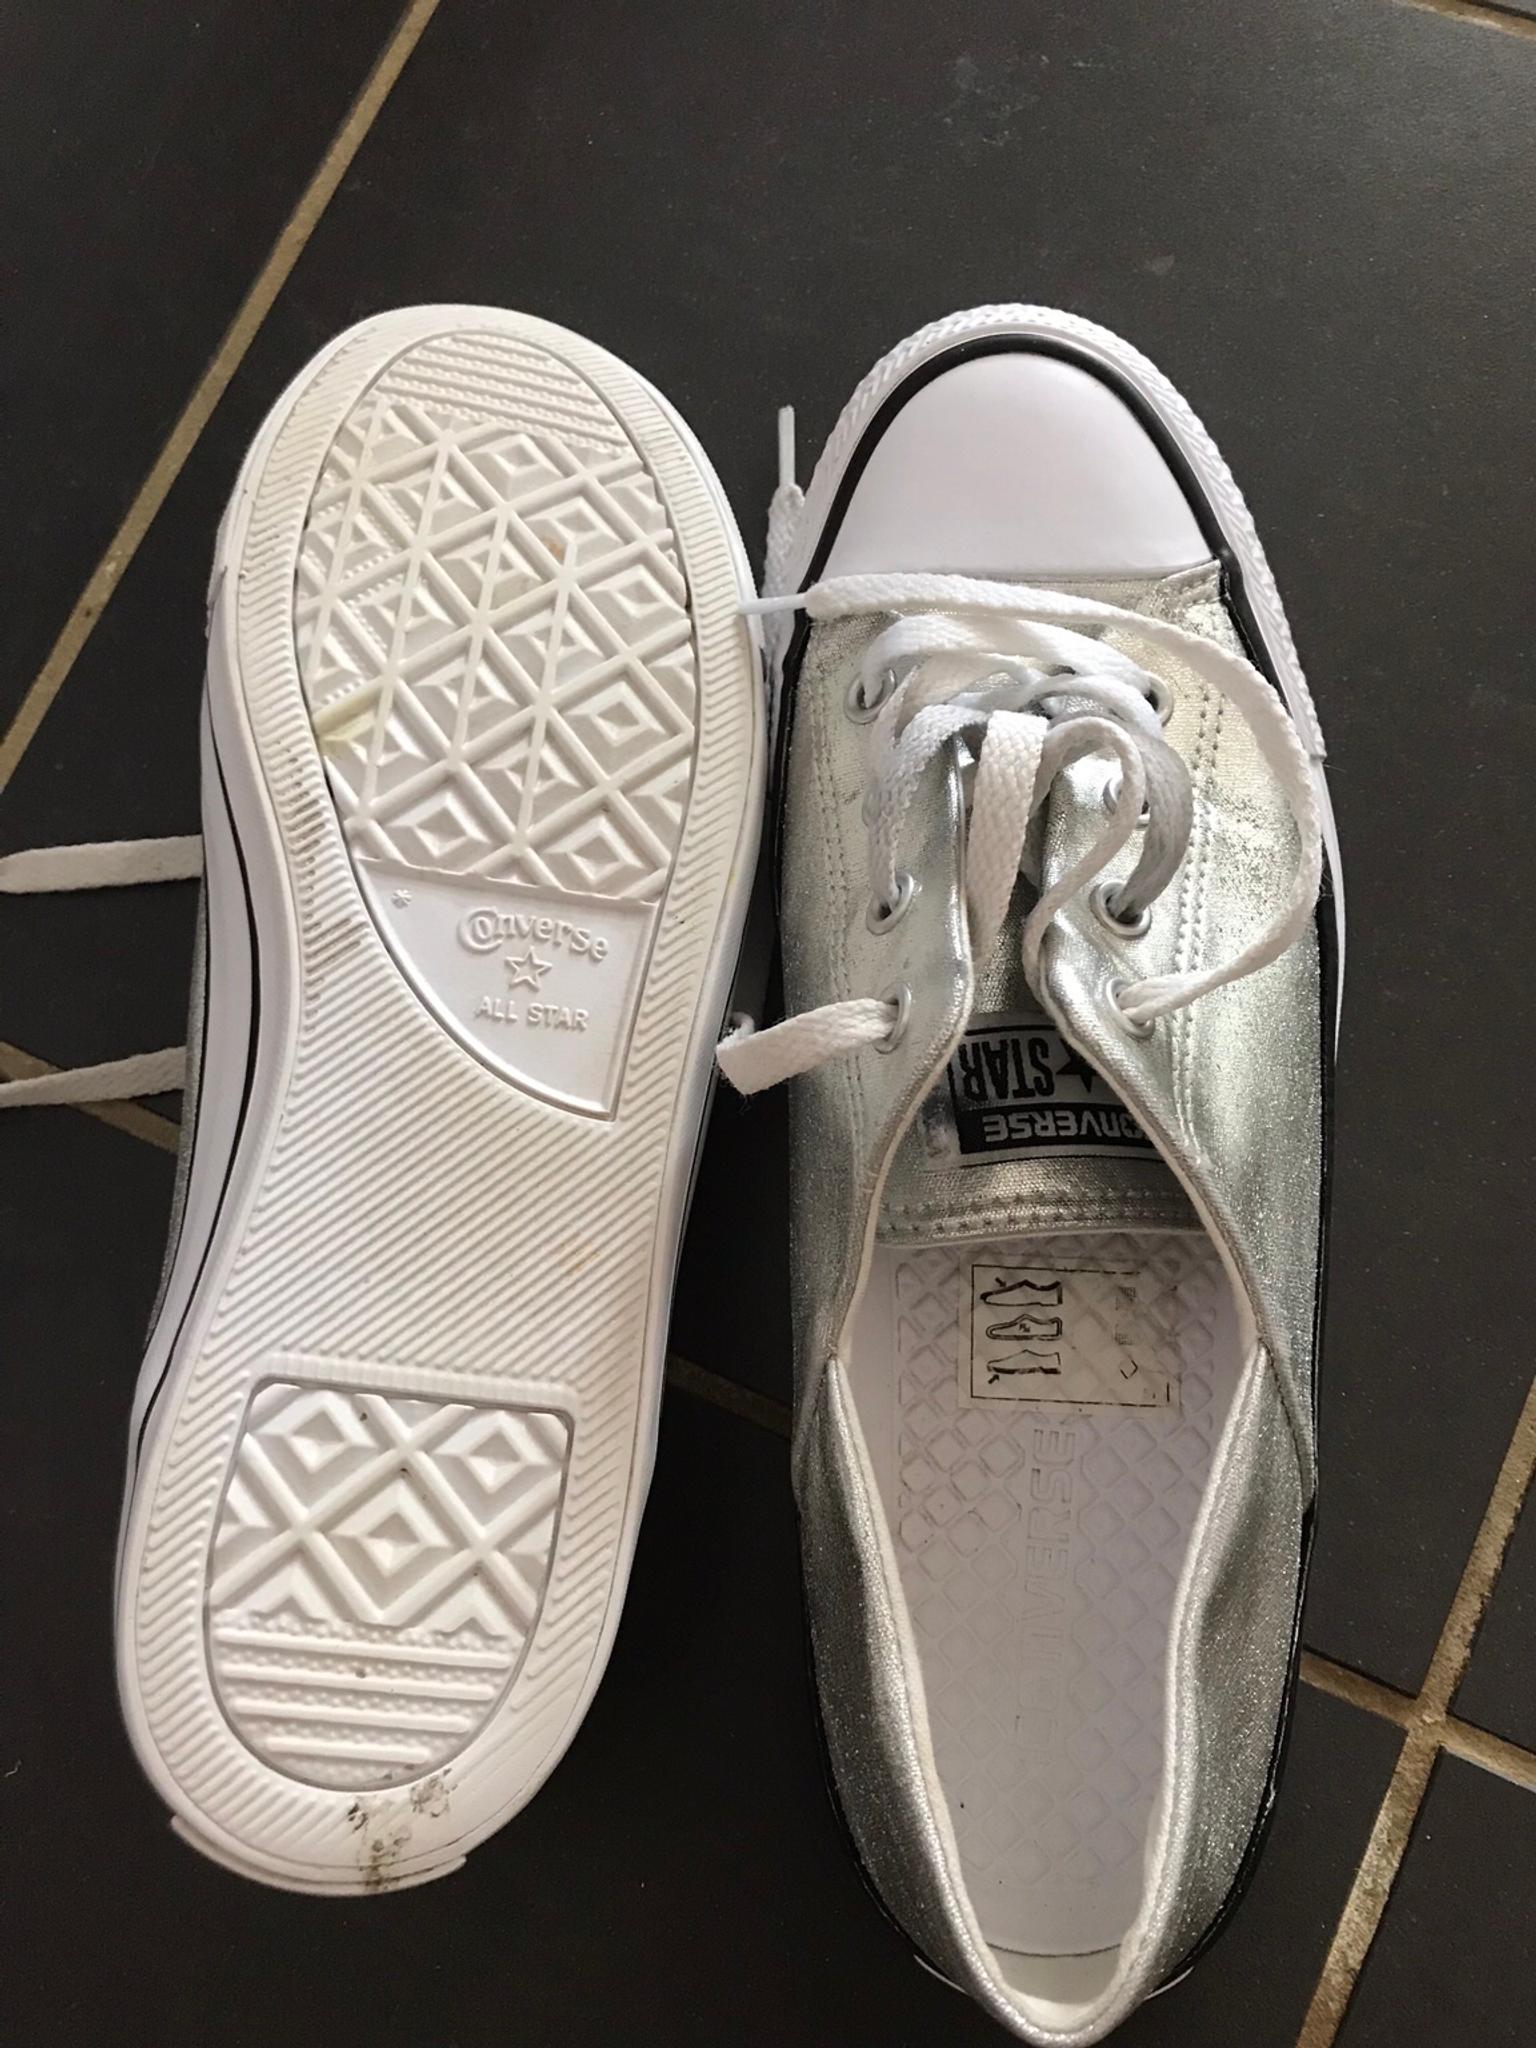 silver converse size 5.5